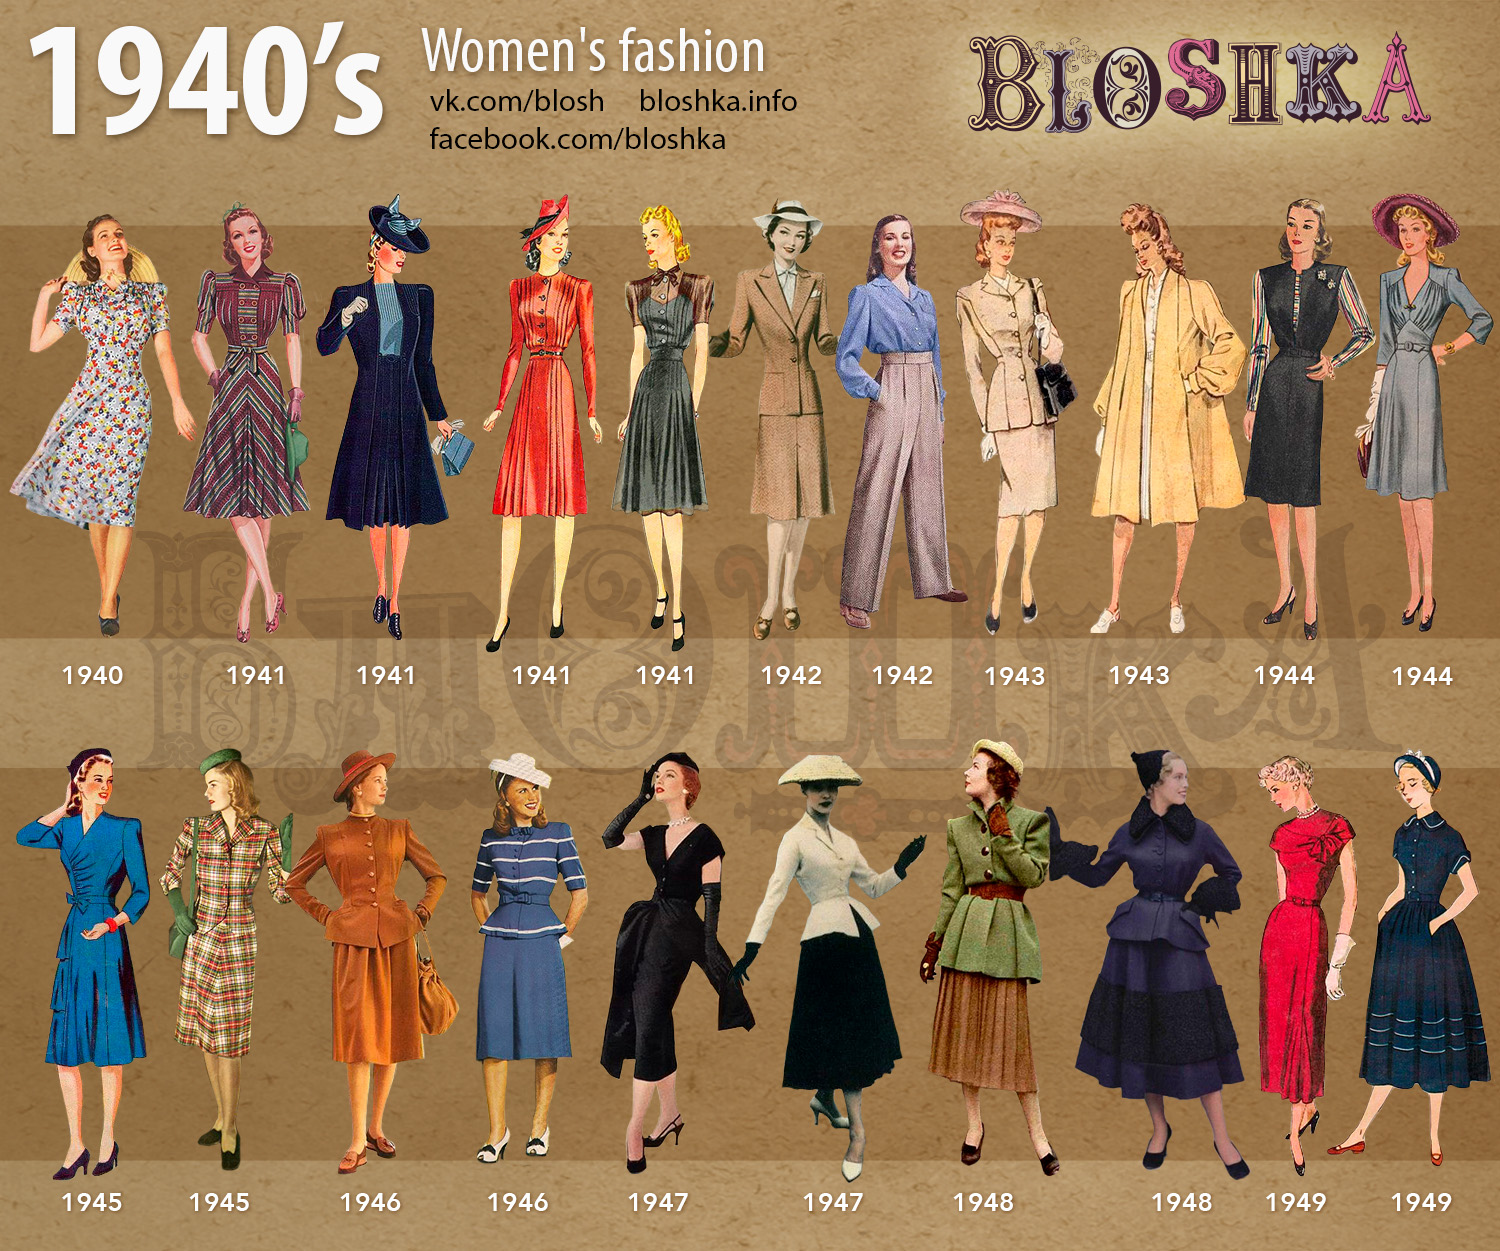 How to Wear 1940s Women's Fashion